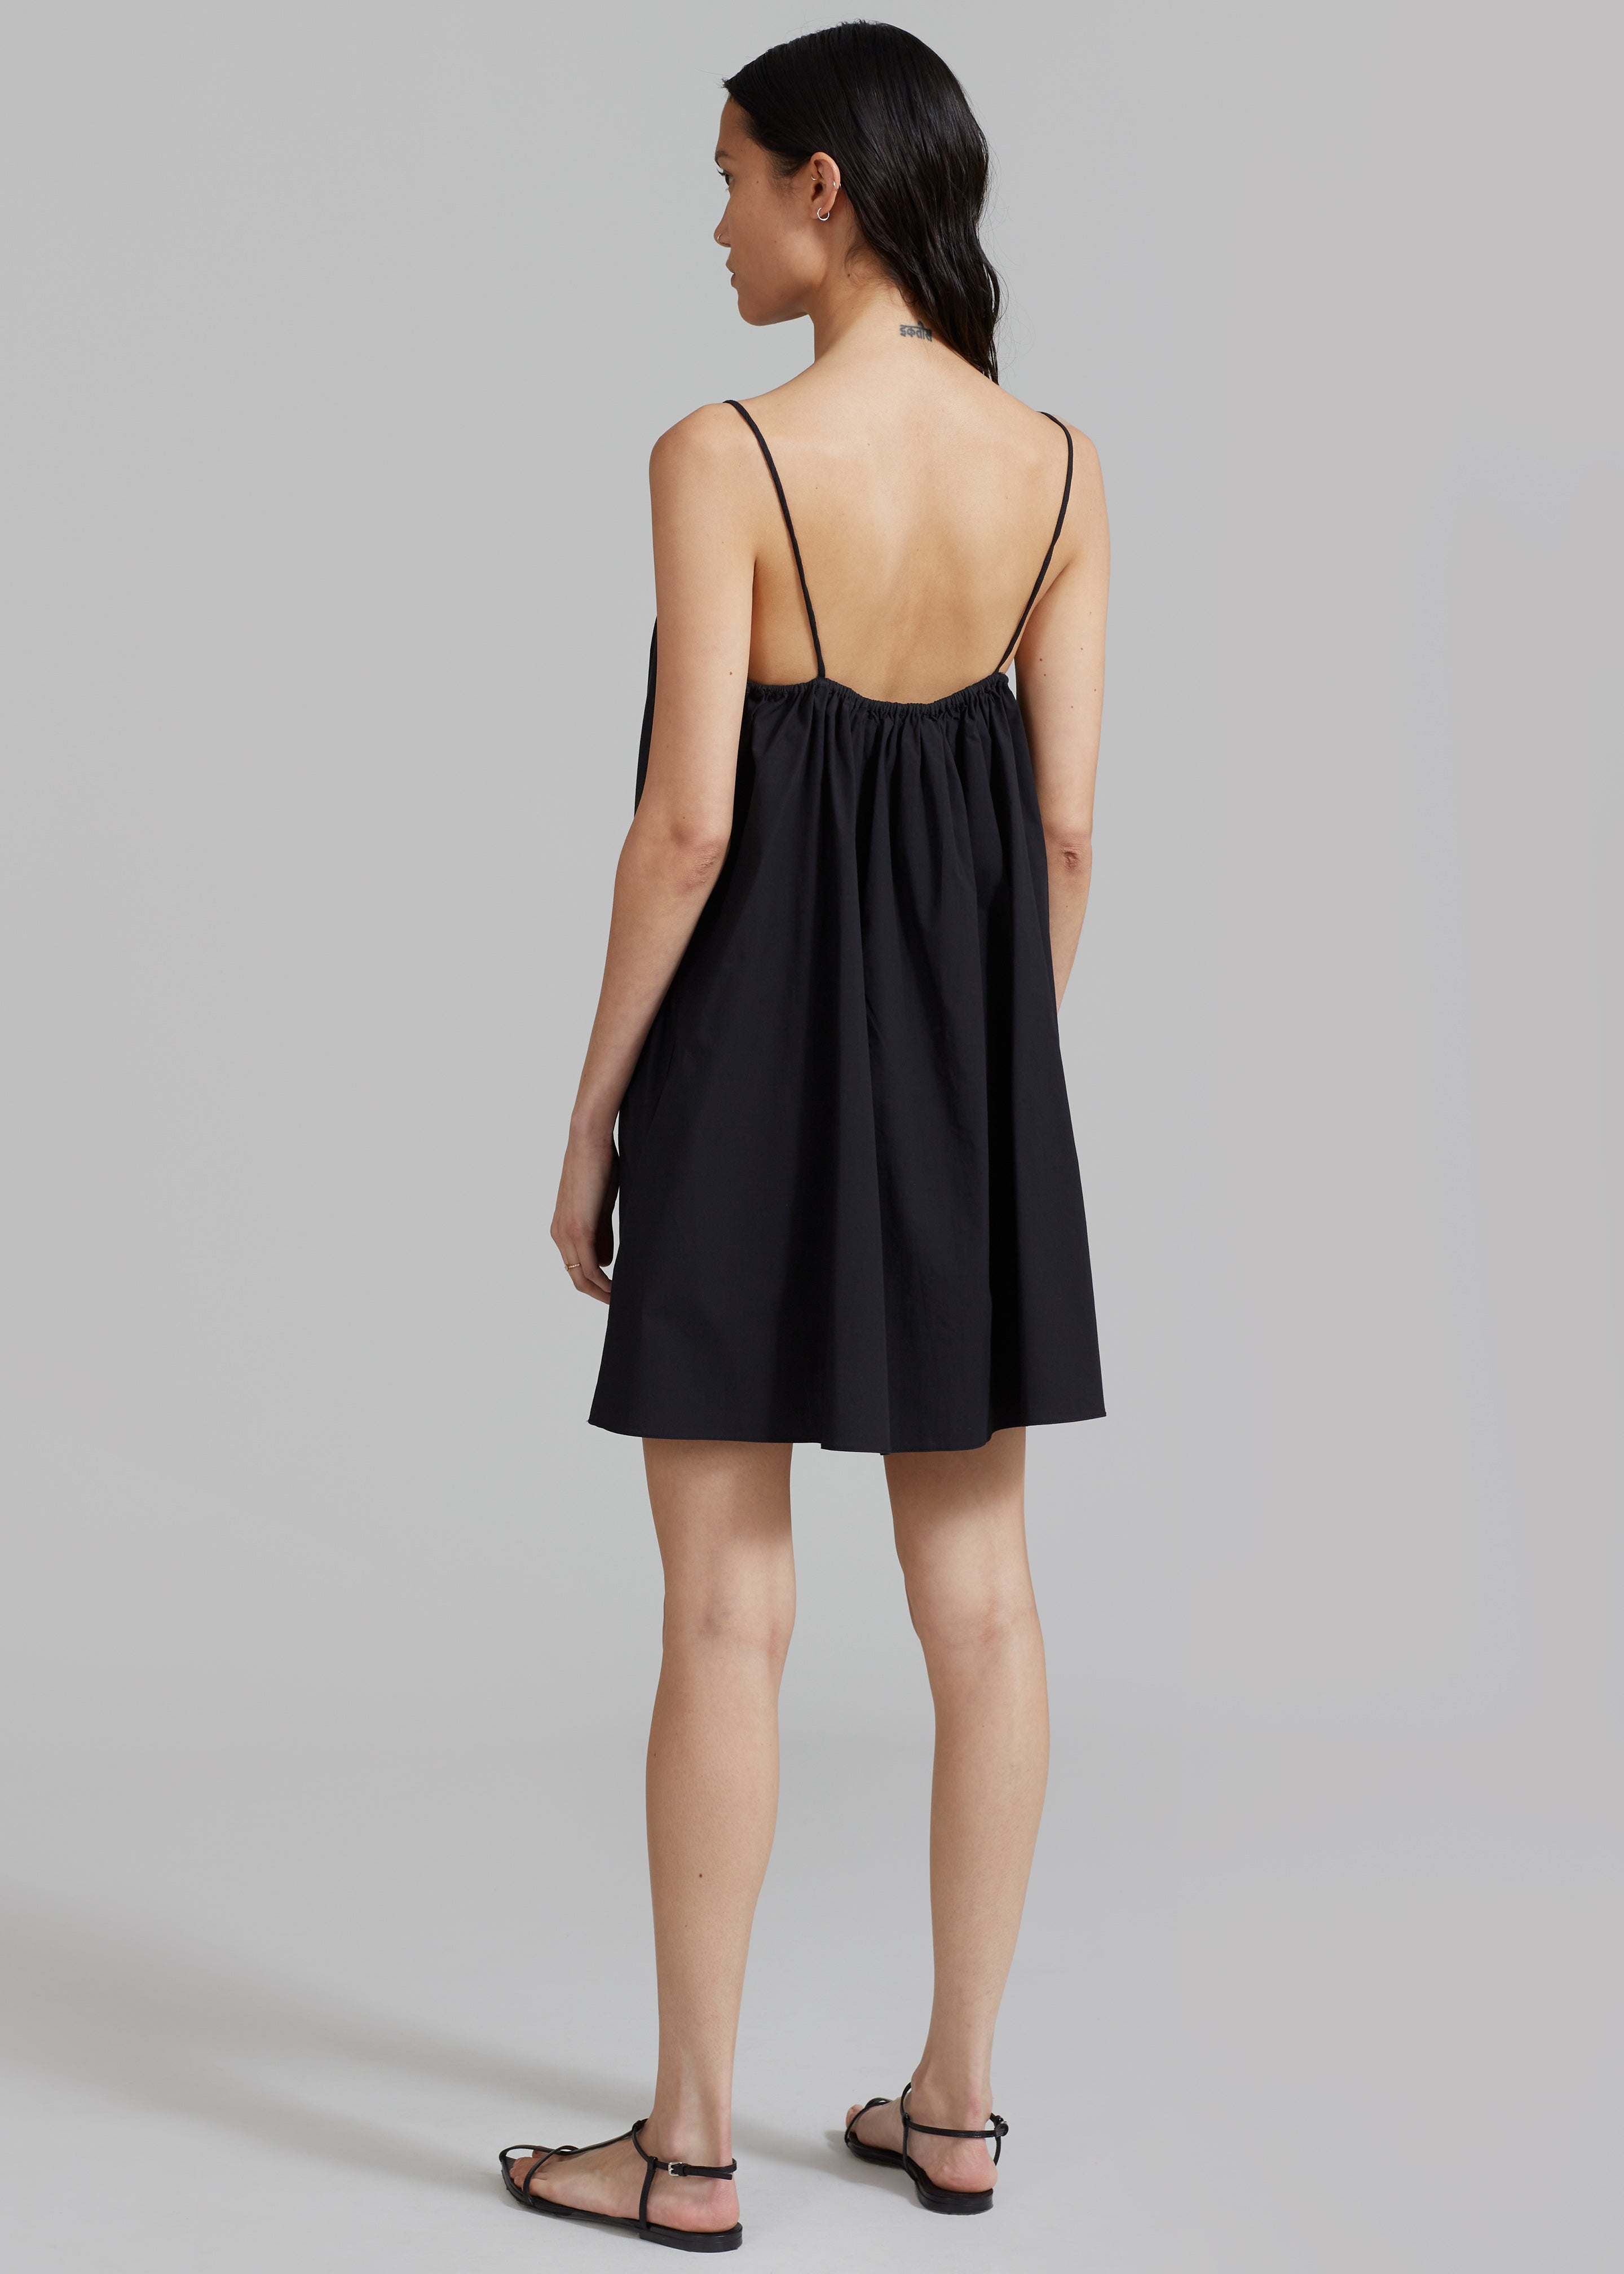 Matteau Voluminous Cami Mini Dress - Black - 6